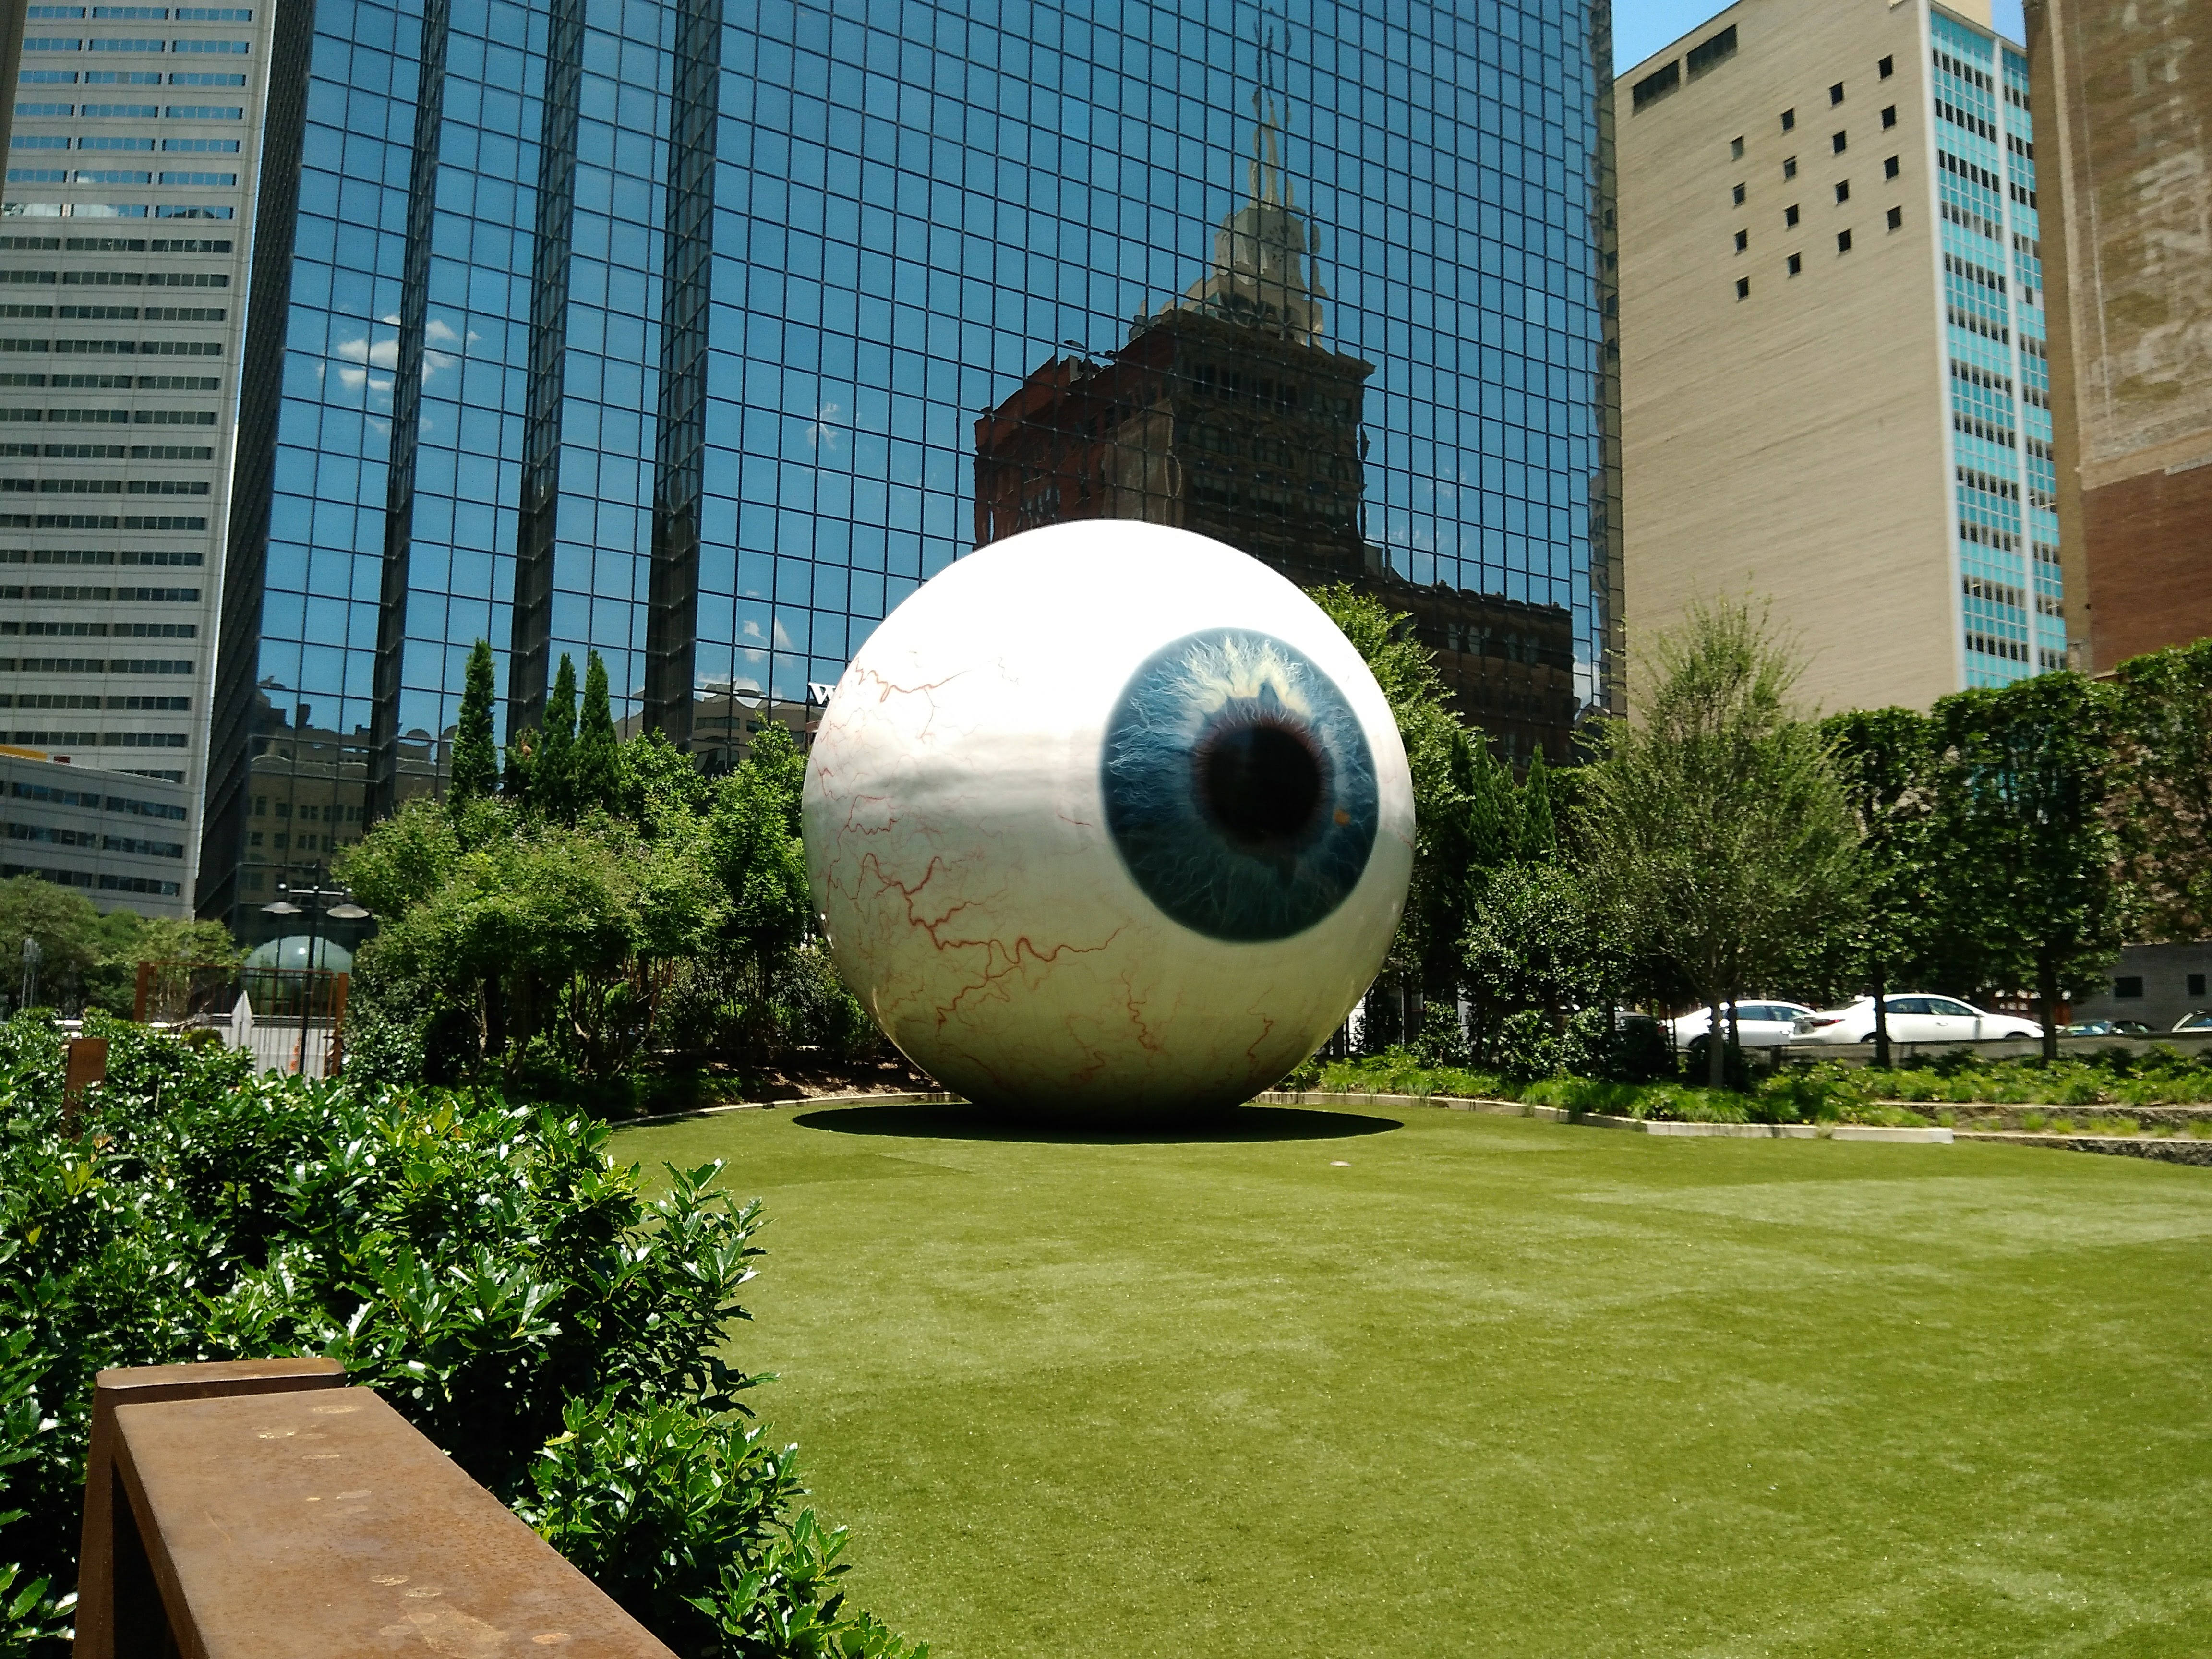 An eyeball of alarming size